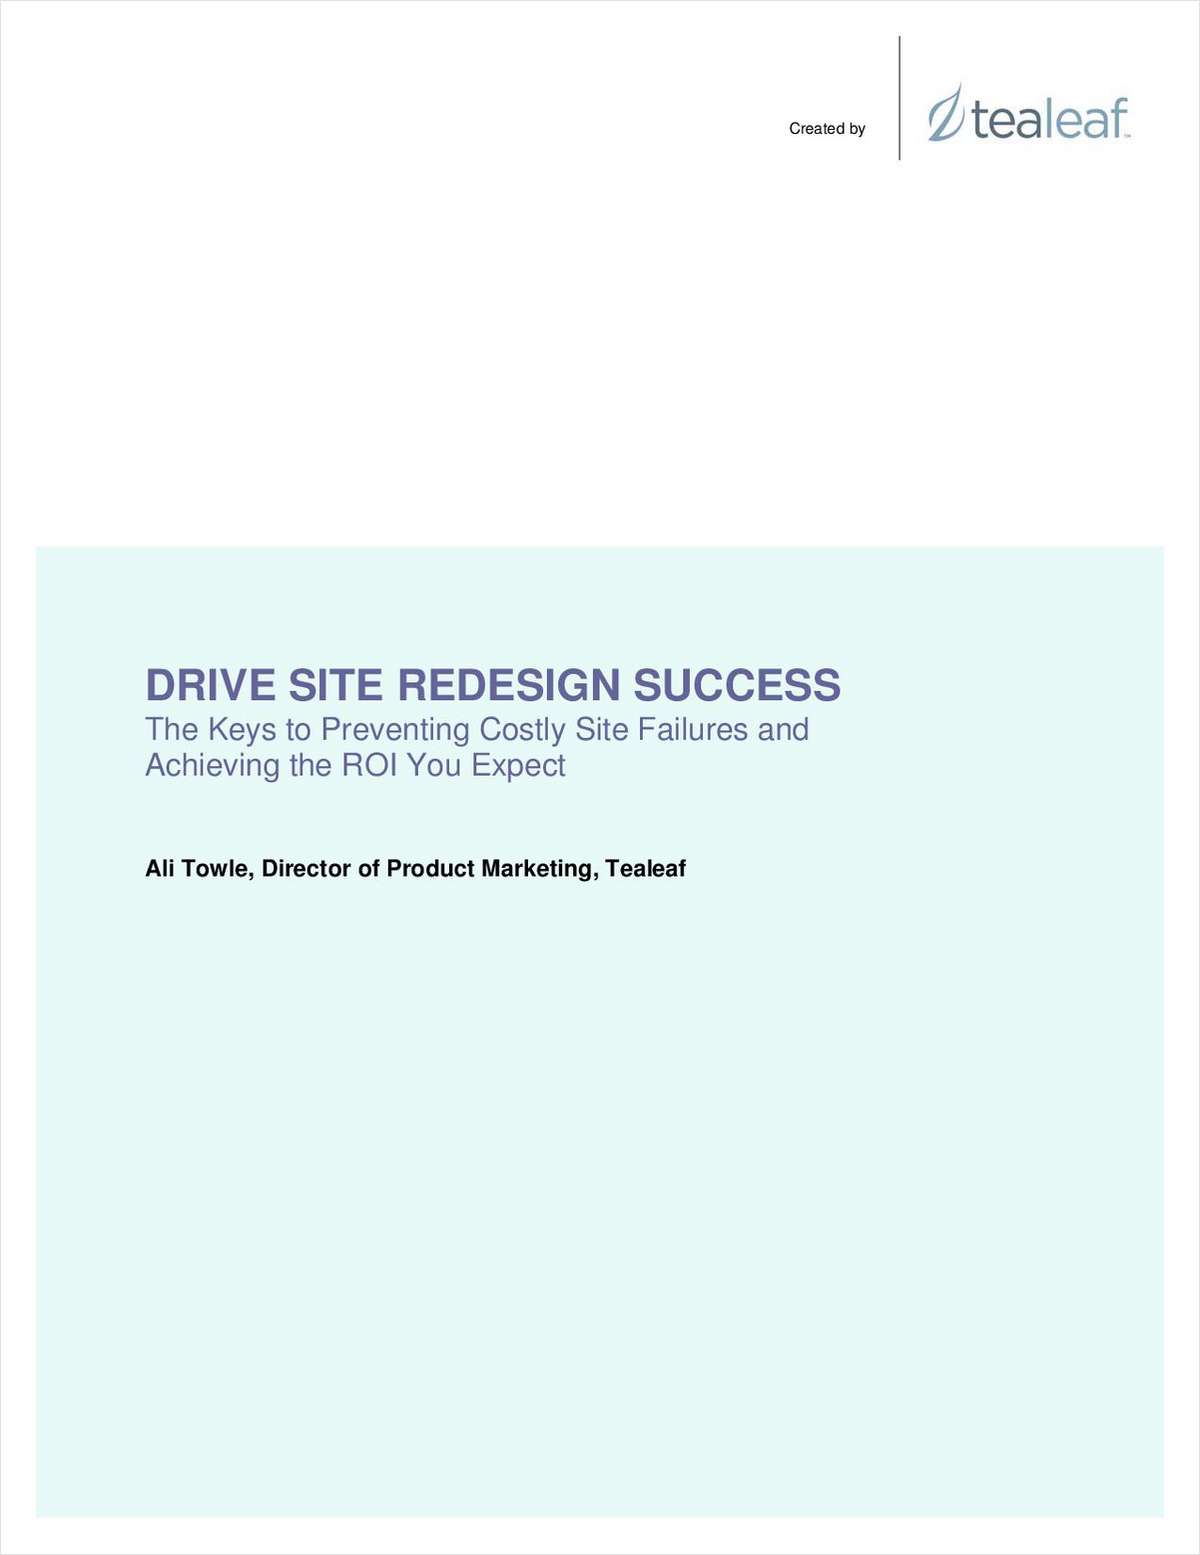 Drive Site Redesign Success